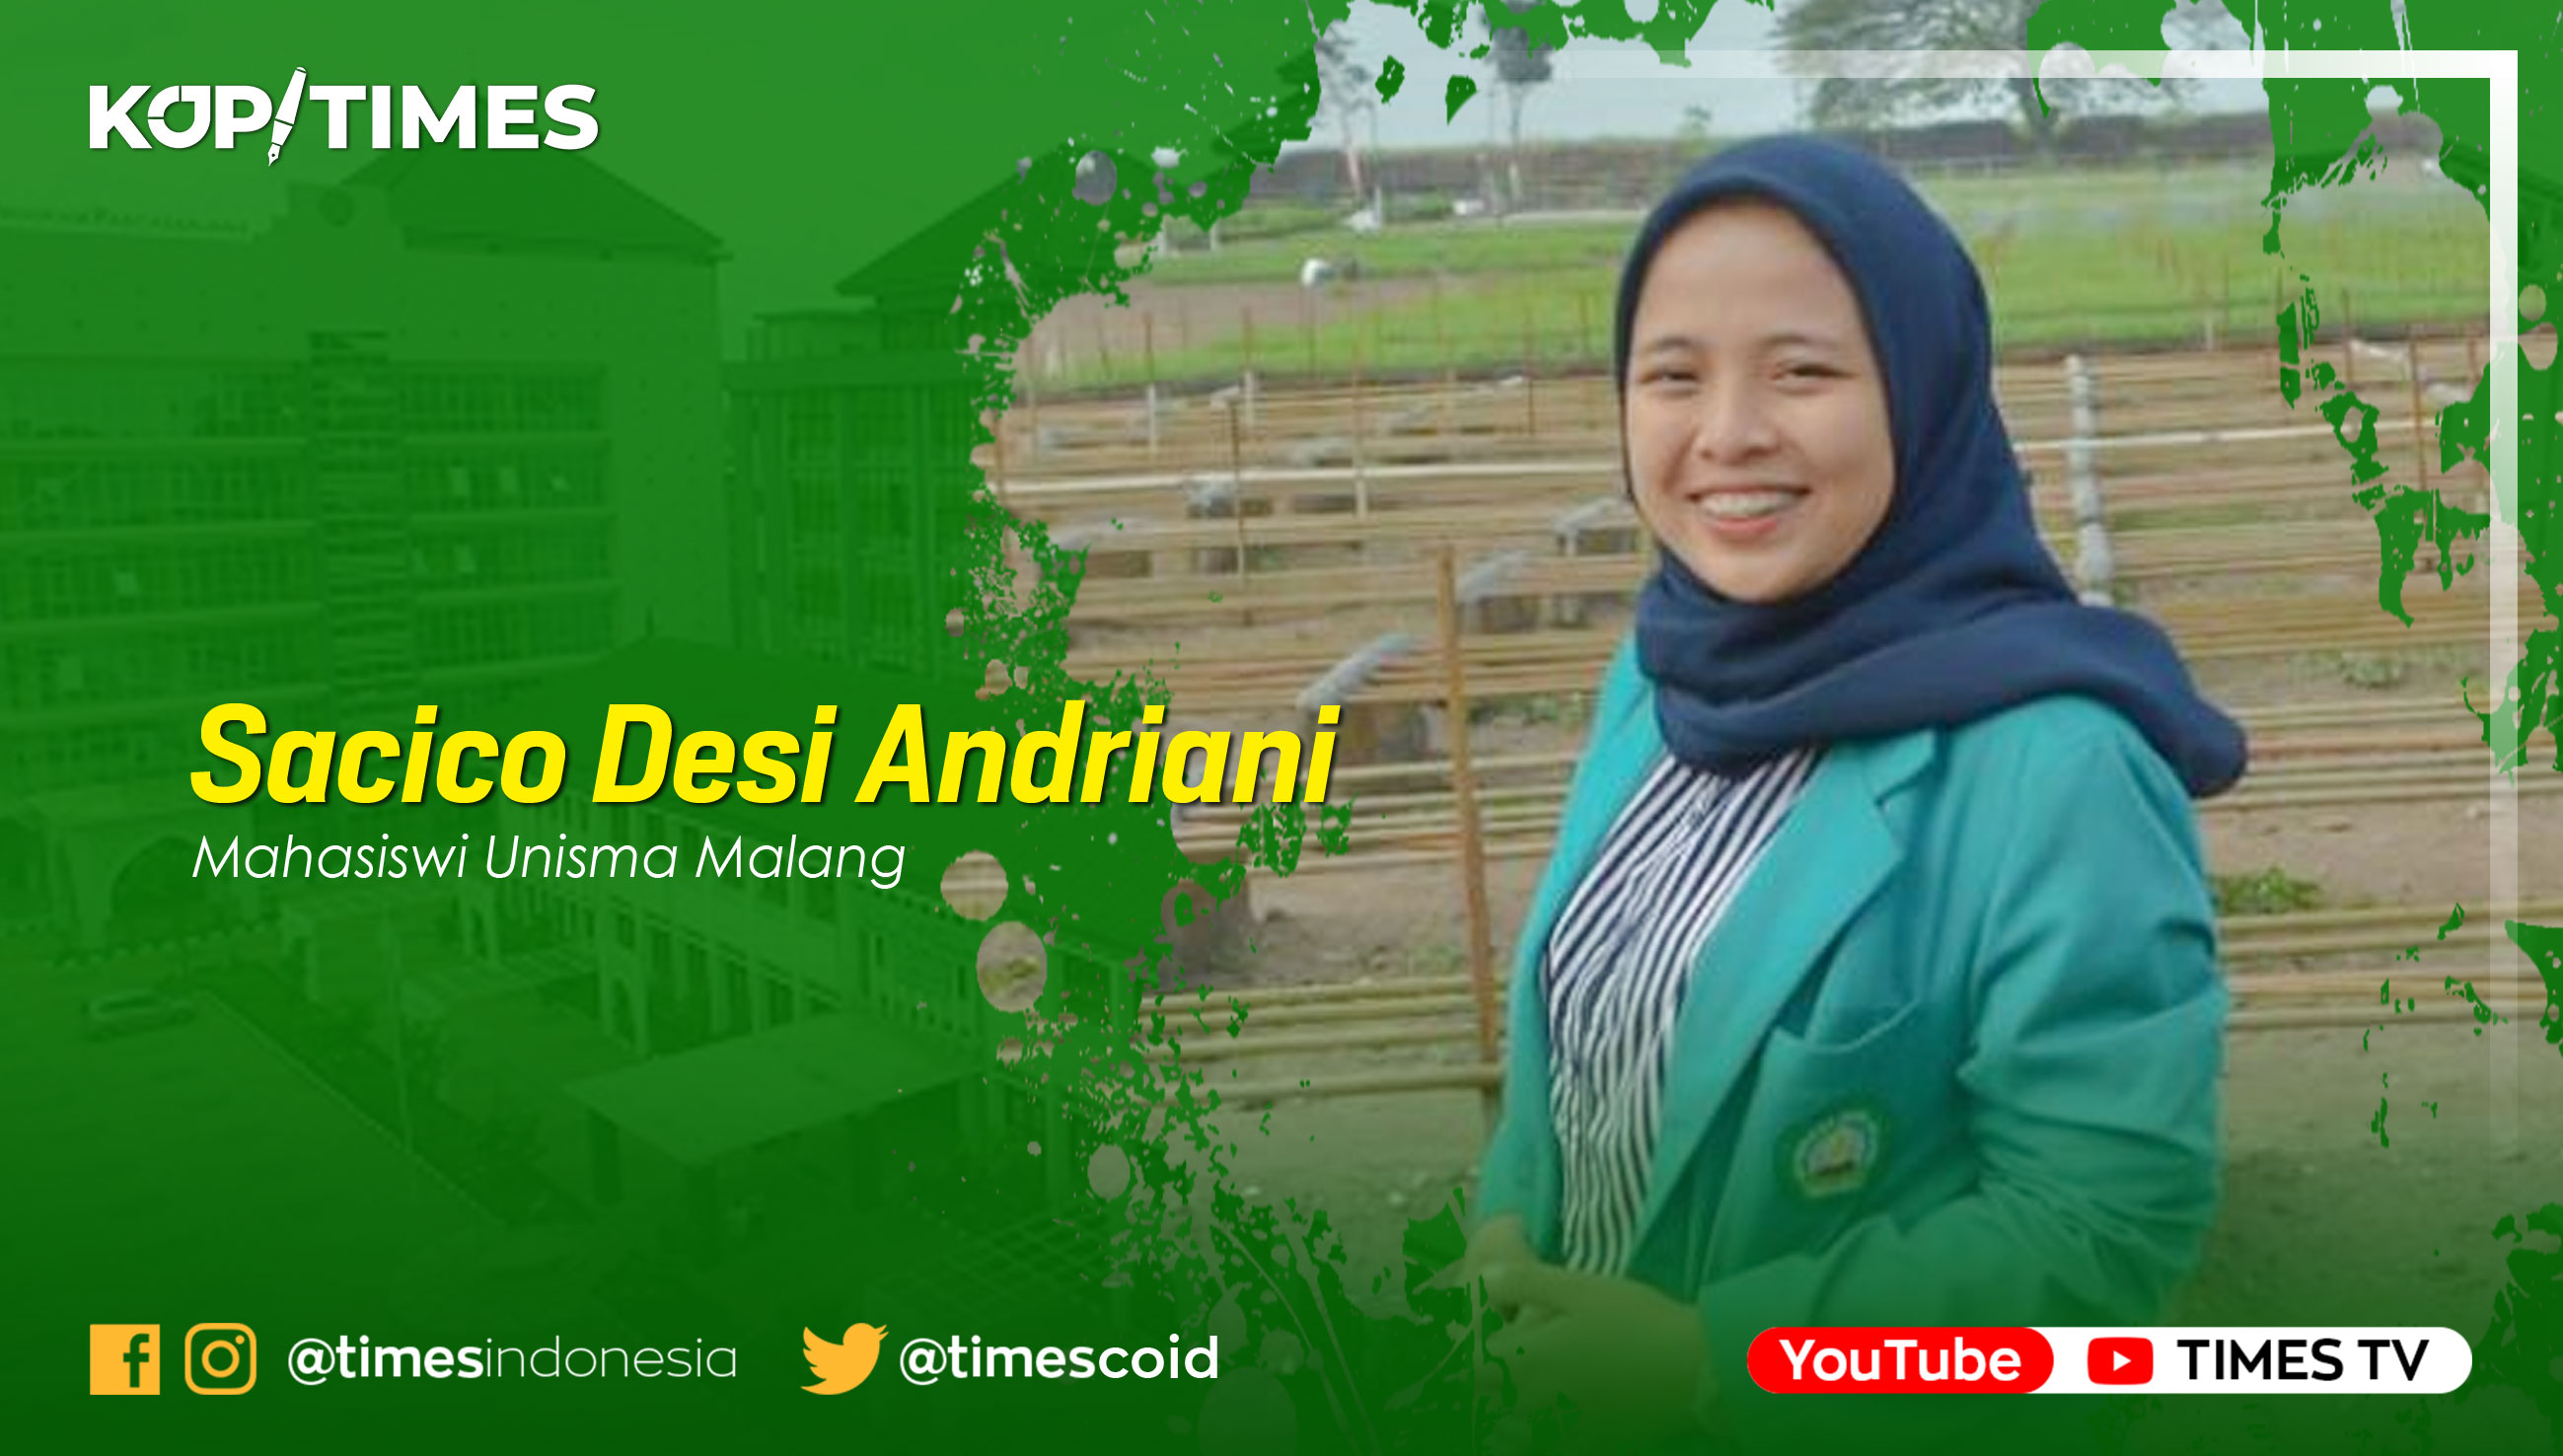 Sacico Desi Andriani, Mahasiswa Penerima Beasiswa Sarjana Muamalat Universitas Islam Malang (UNISMA).